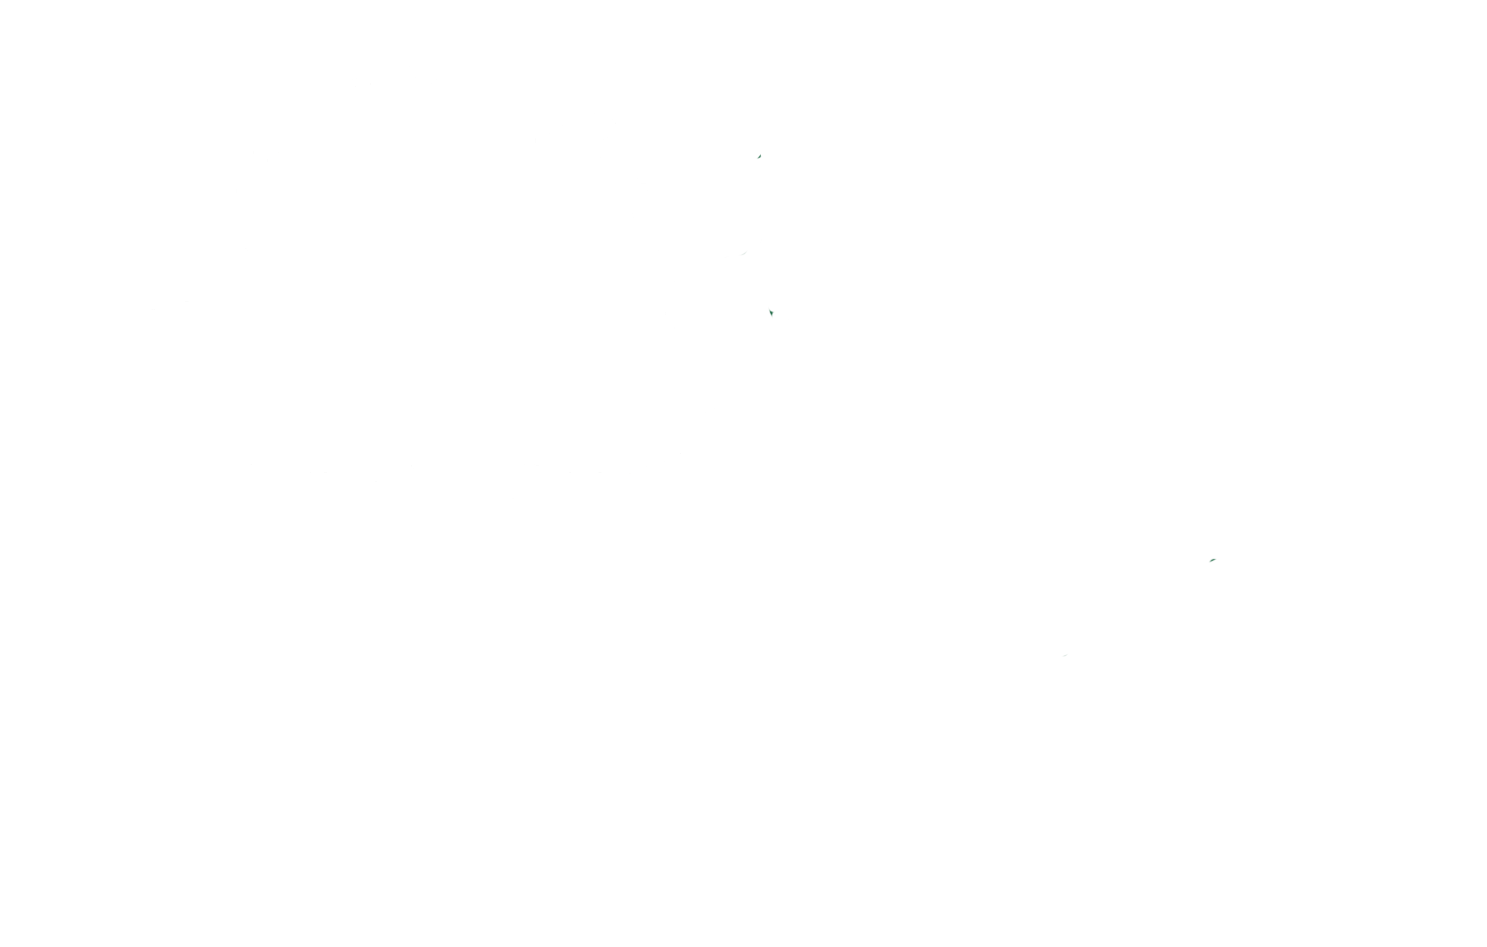 Funeraria Hermanos Fernández